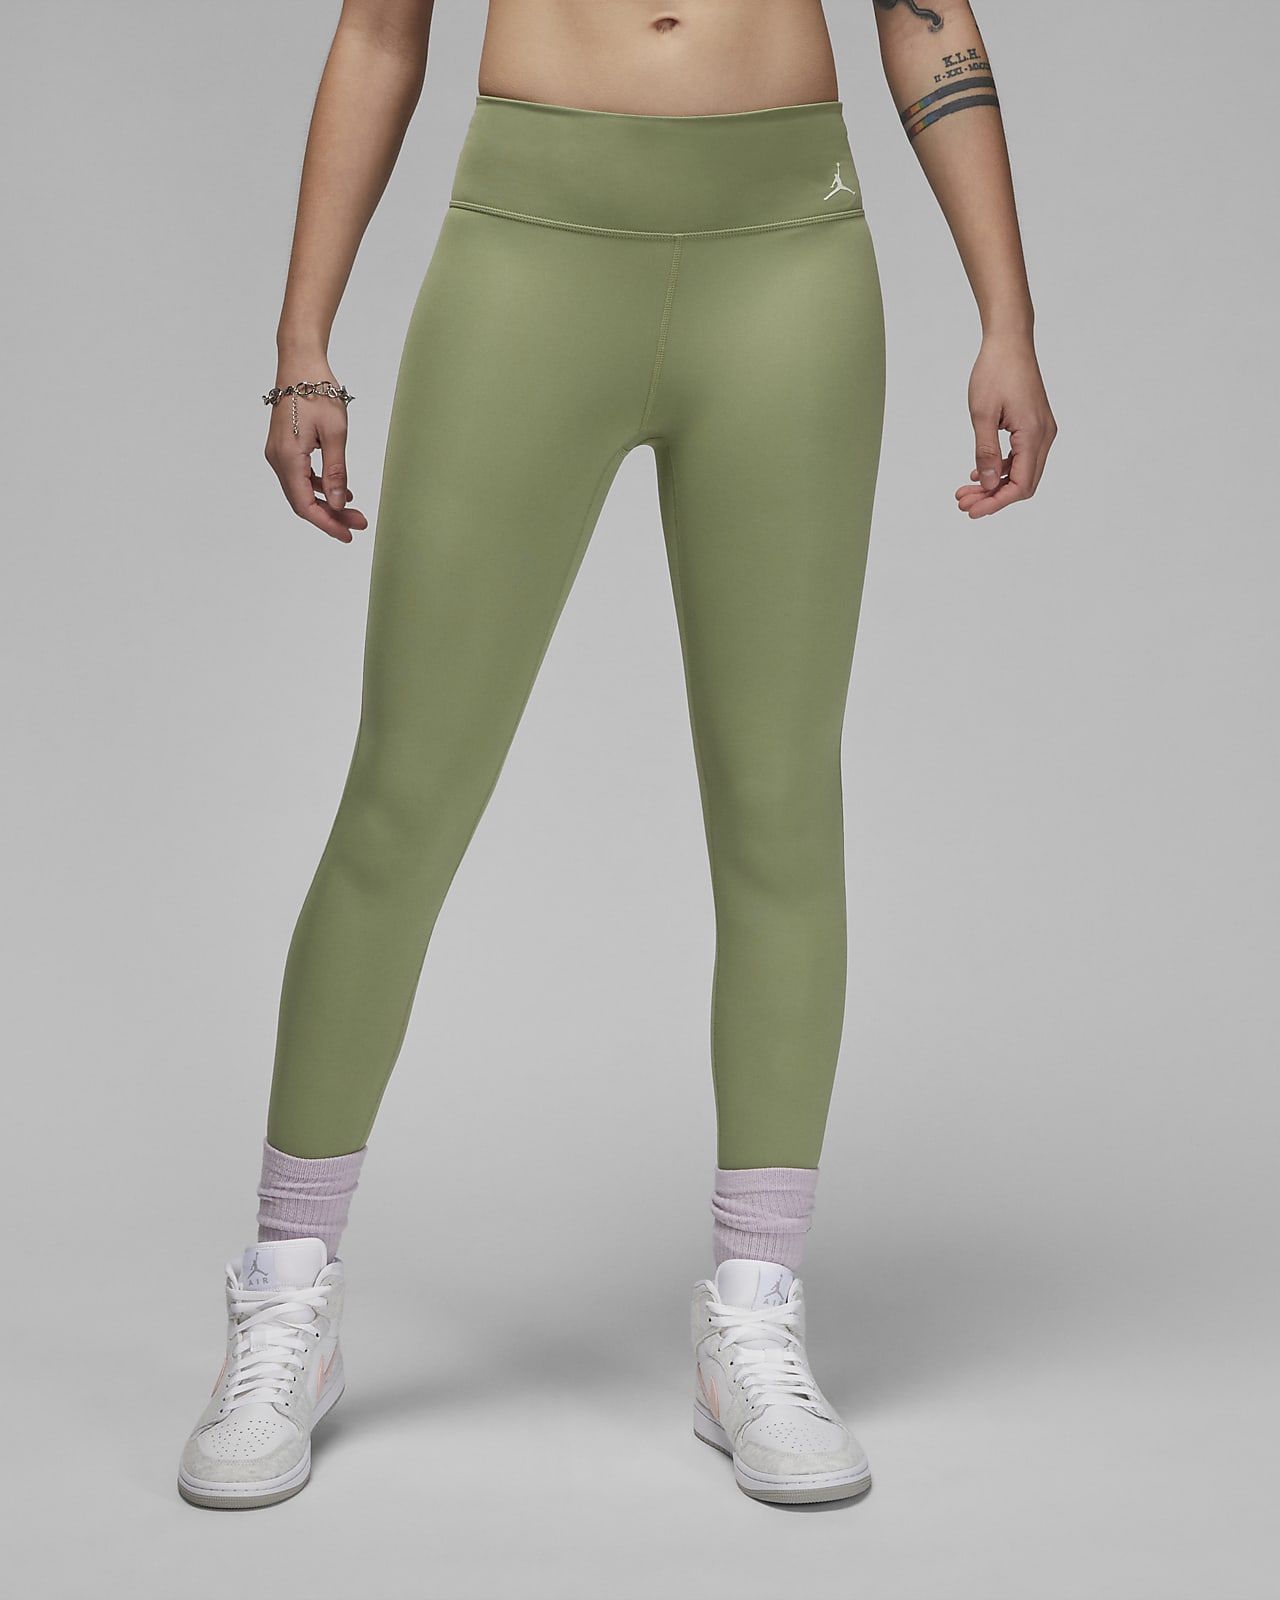 code positie Onzorgvuldigheid Jordan Sport Legging met logo voor dames. Nike NL